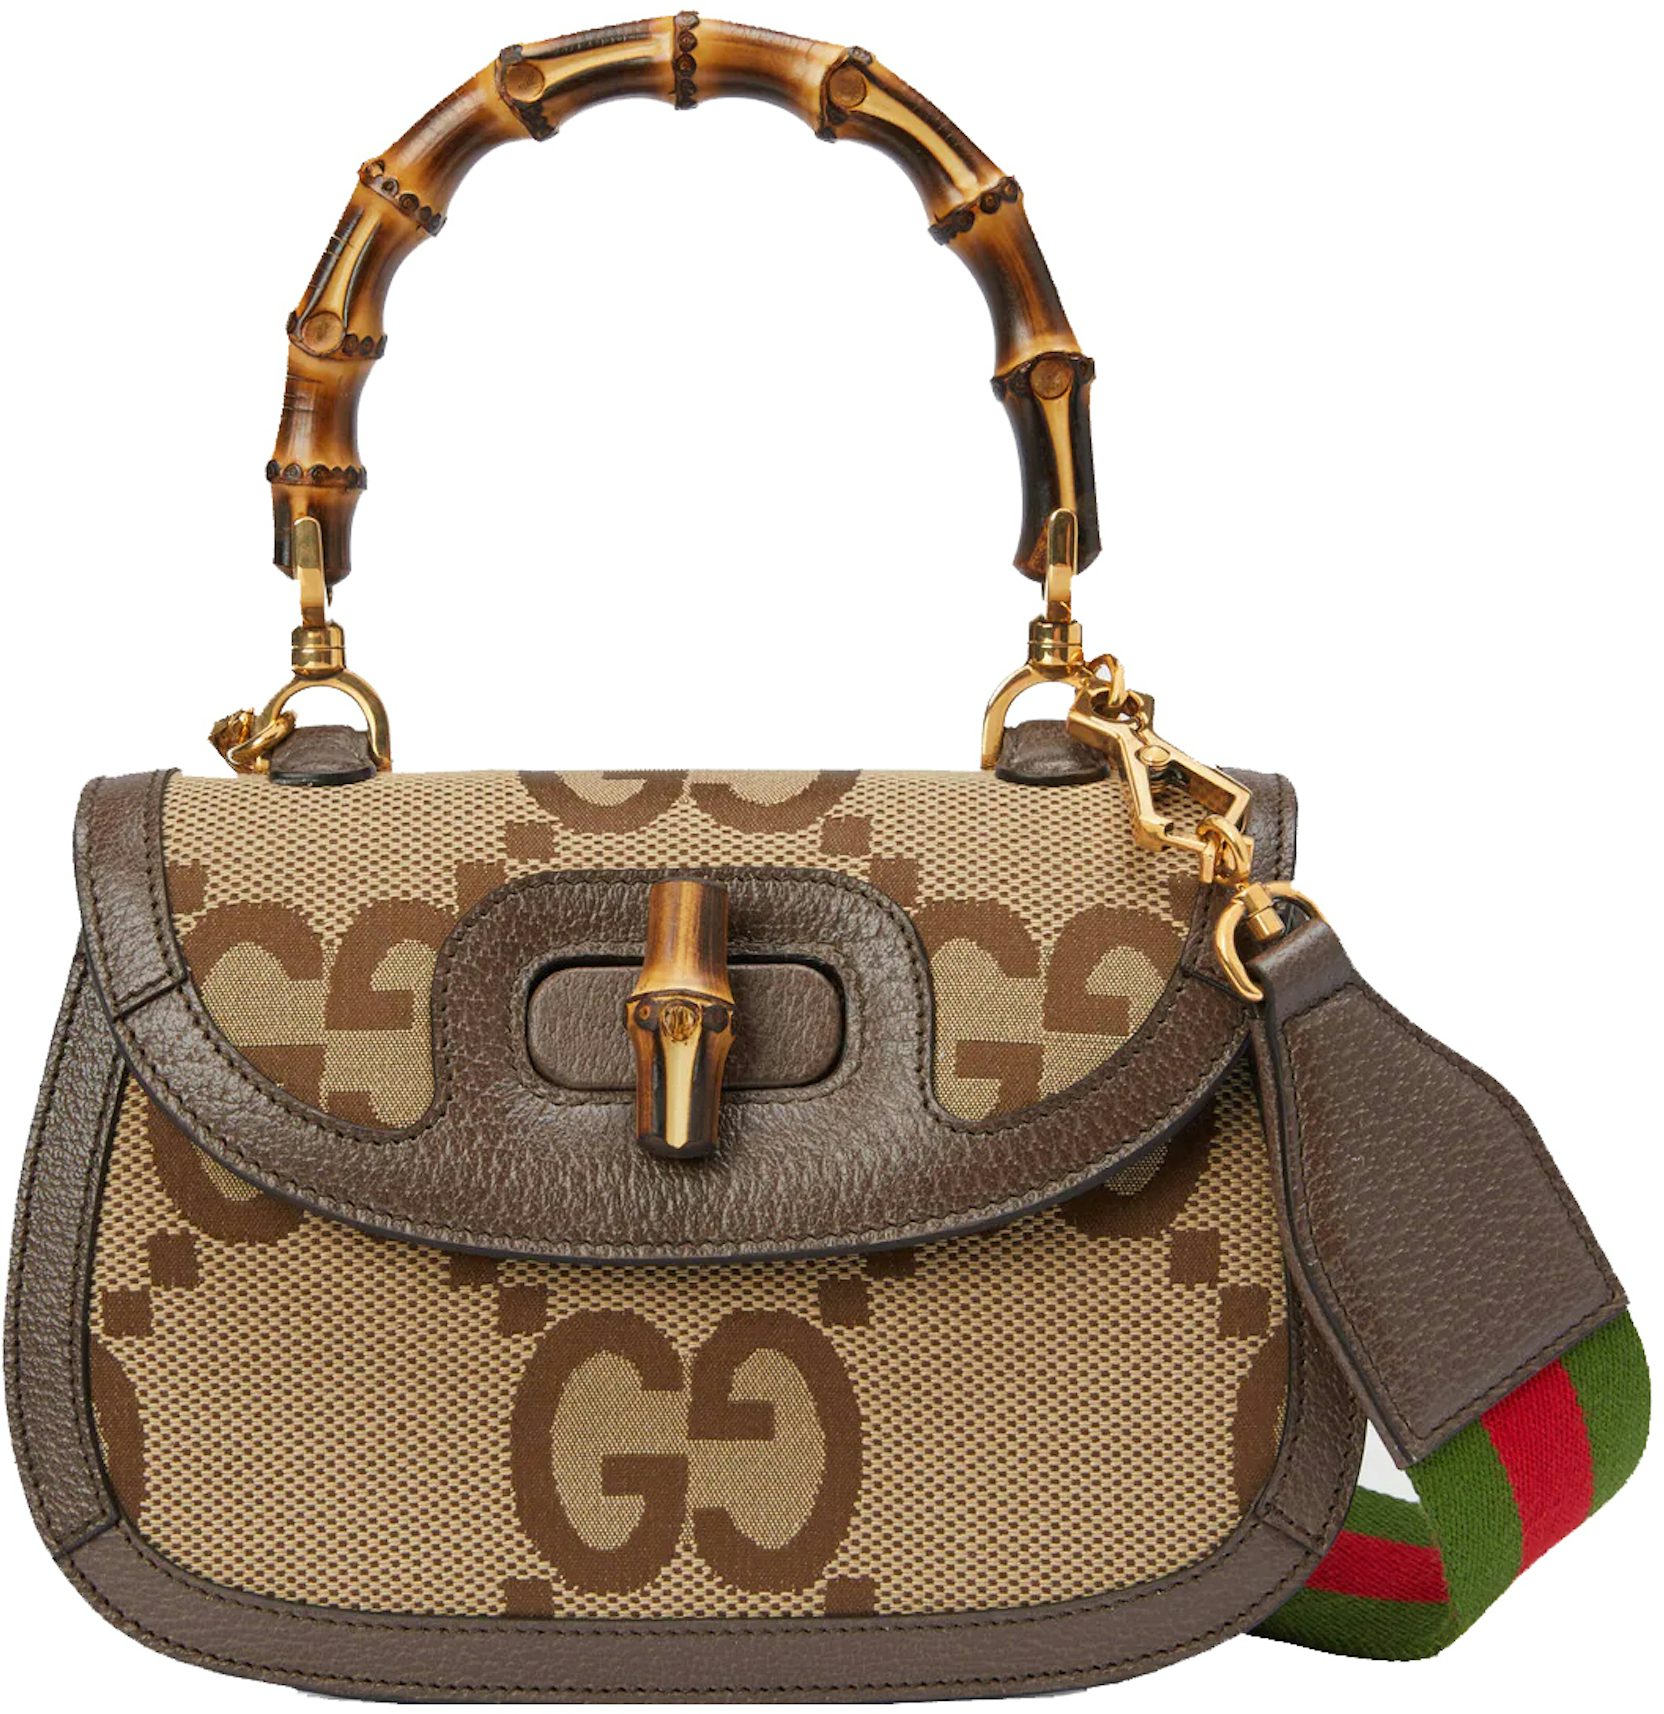 Jumbo GG mini tote bag in camel and ebony GG canvas